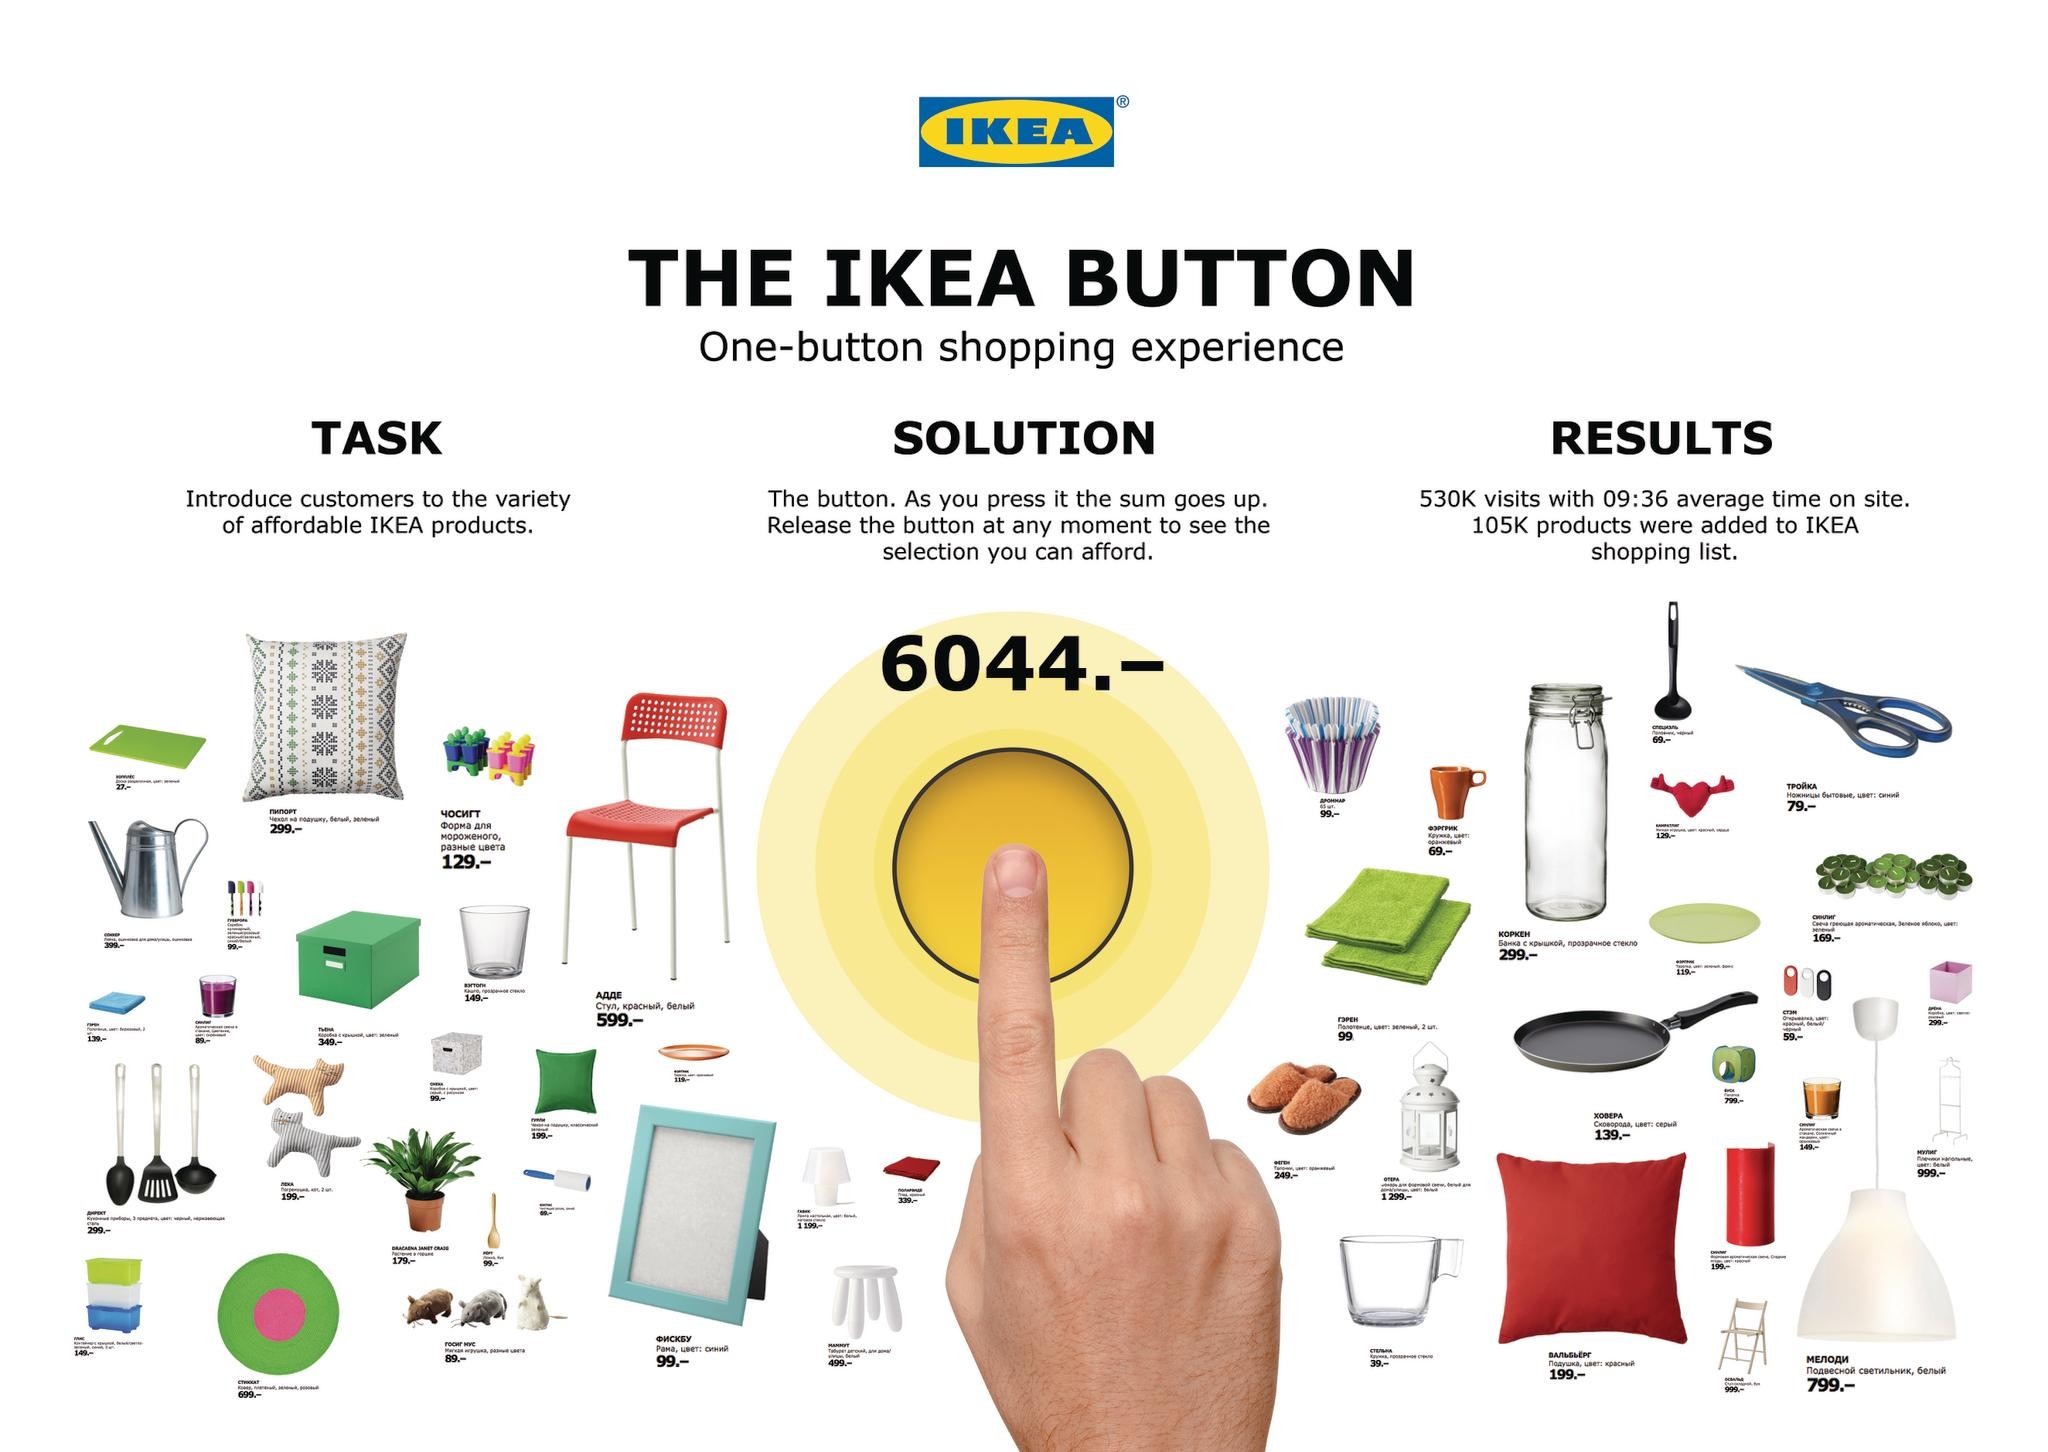 THE IKEA BUTTON